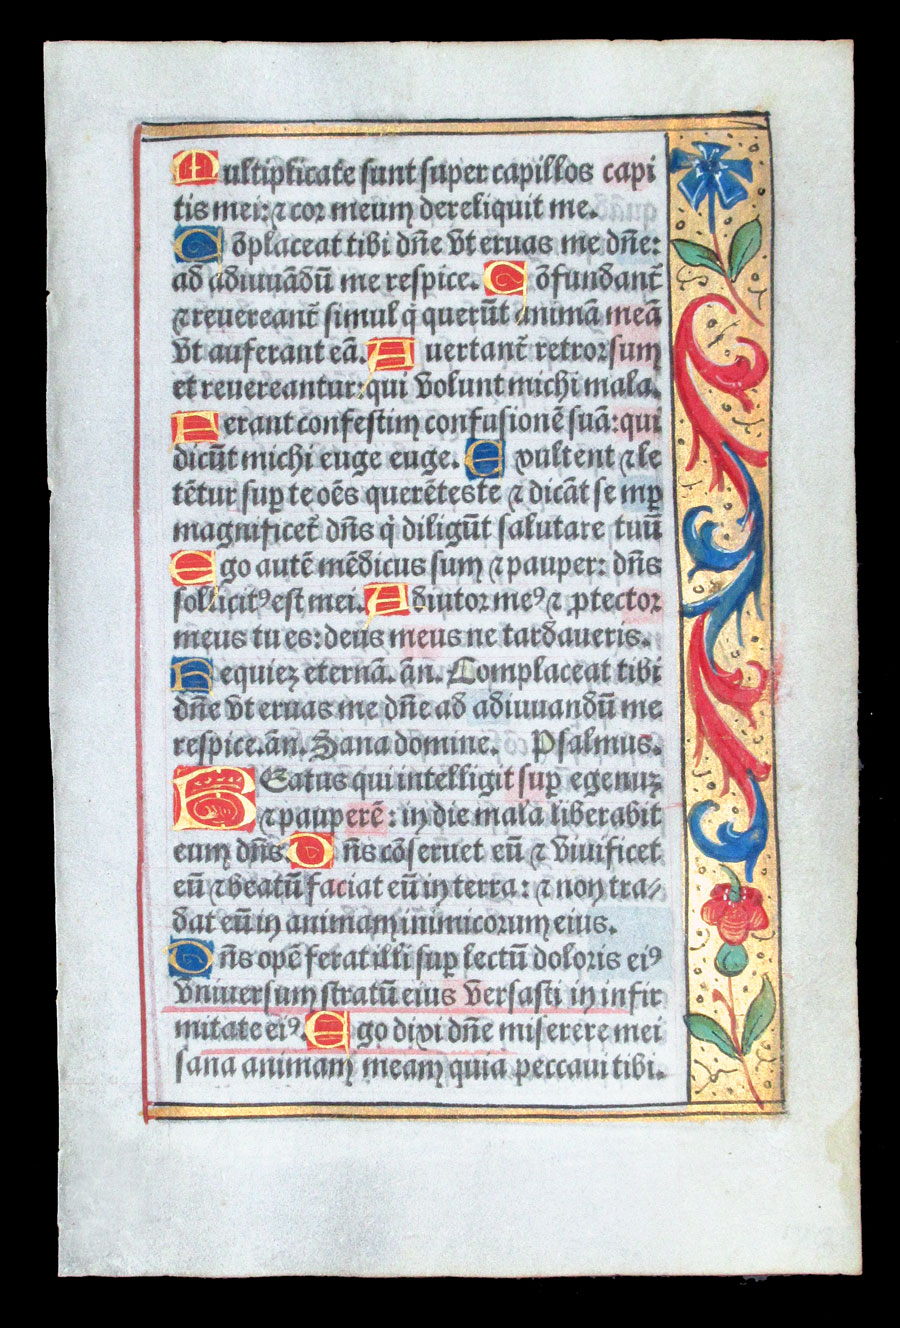 c 1532 Book of Hours Leaf - Psalms - Elaborate border